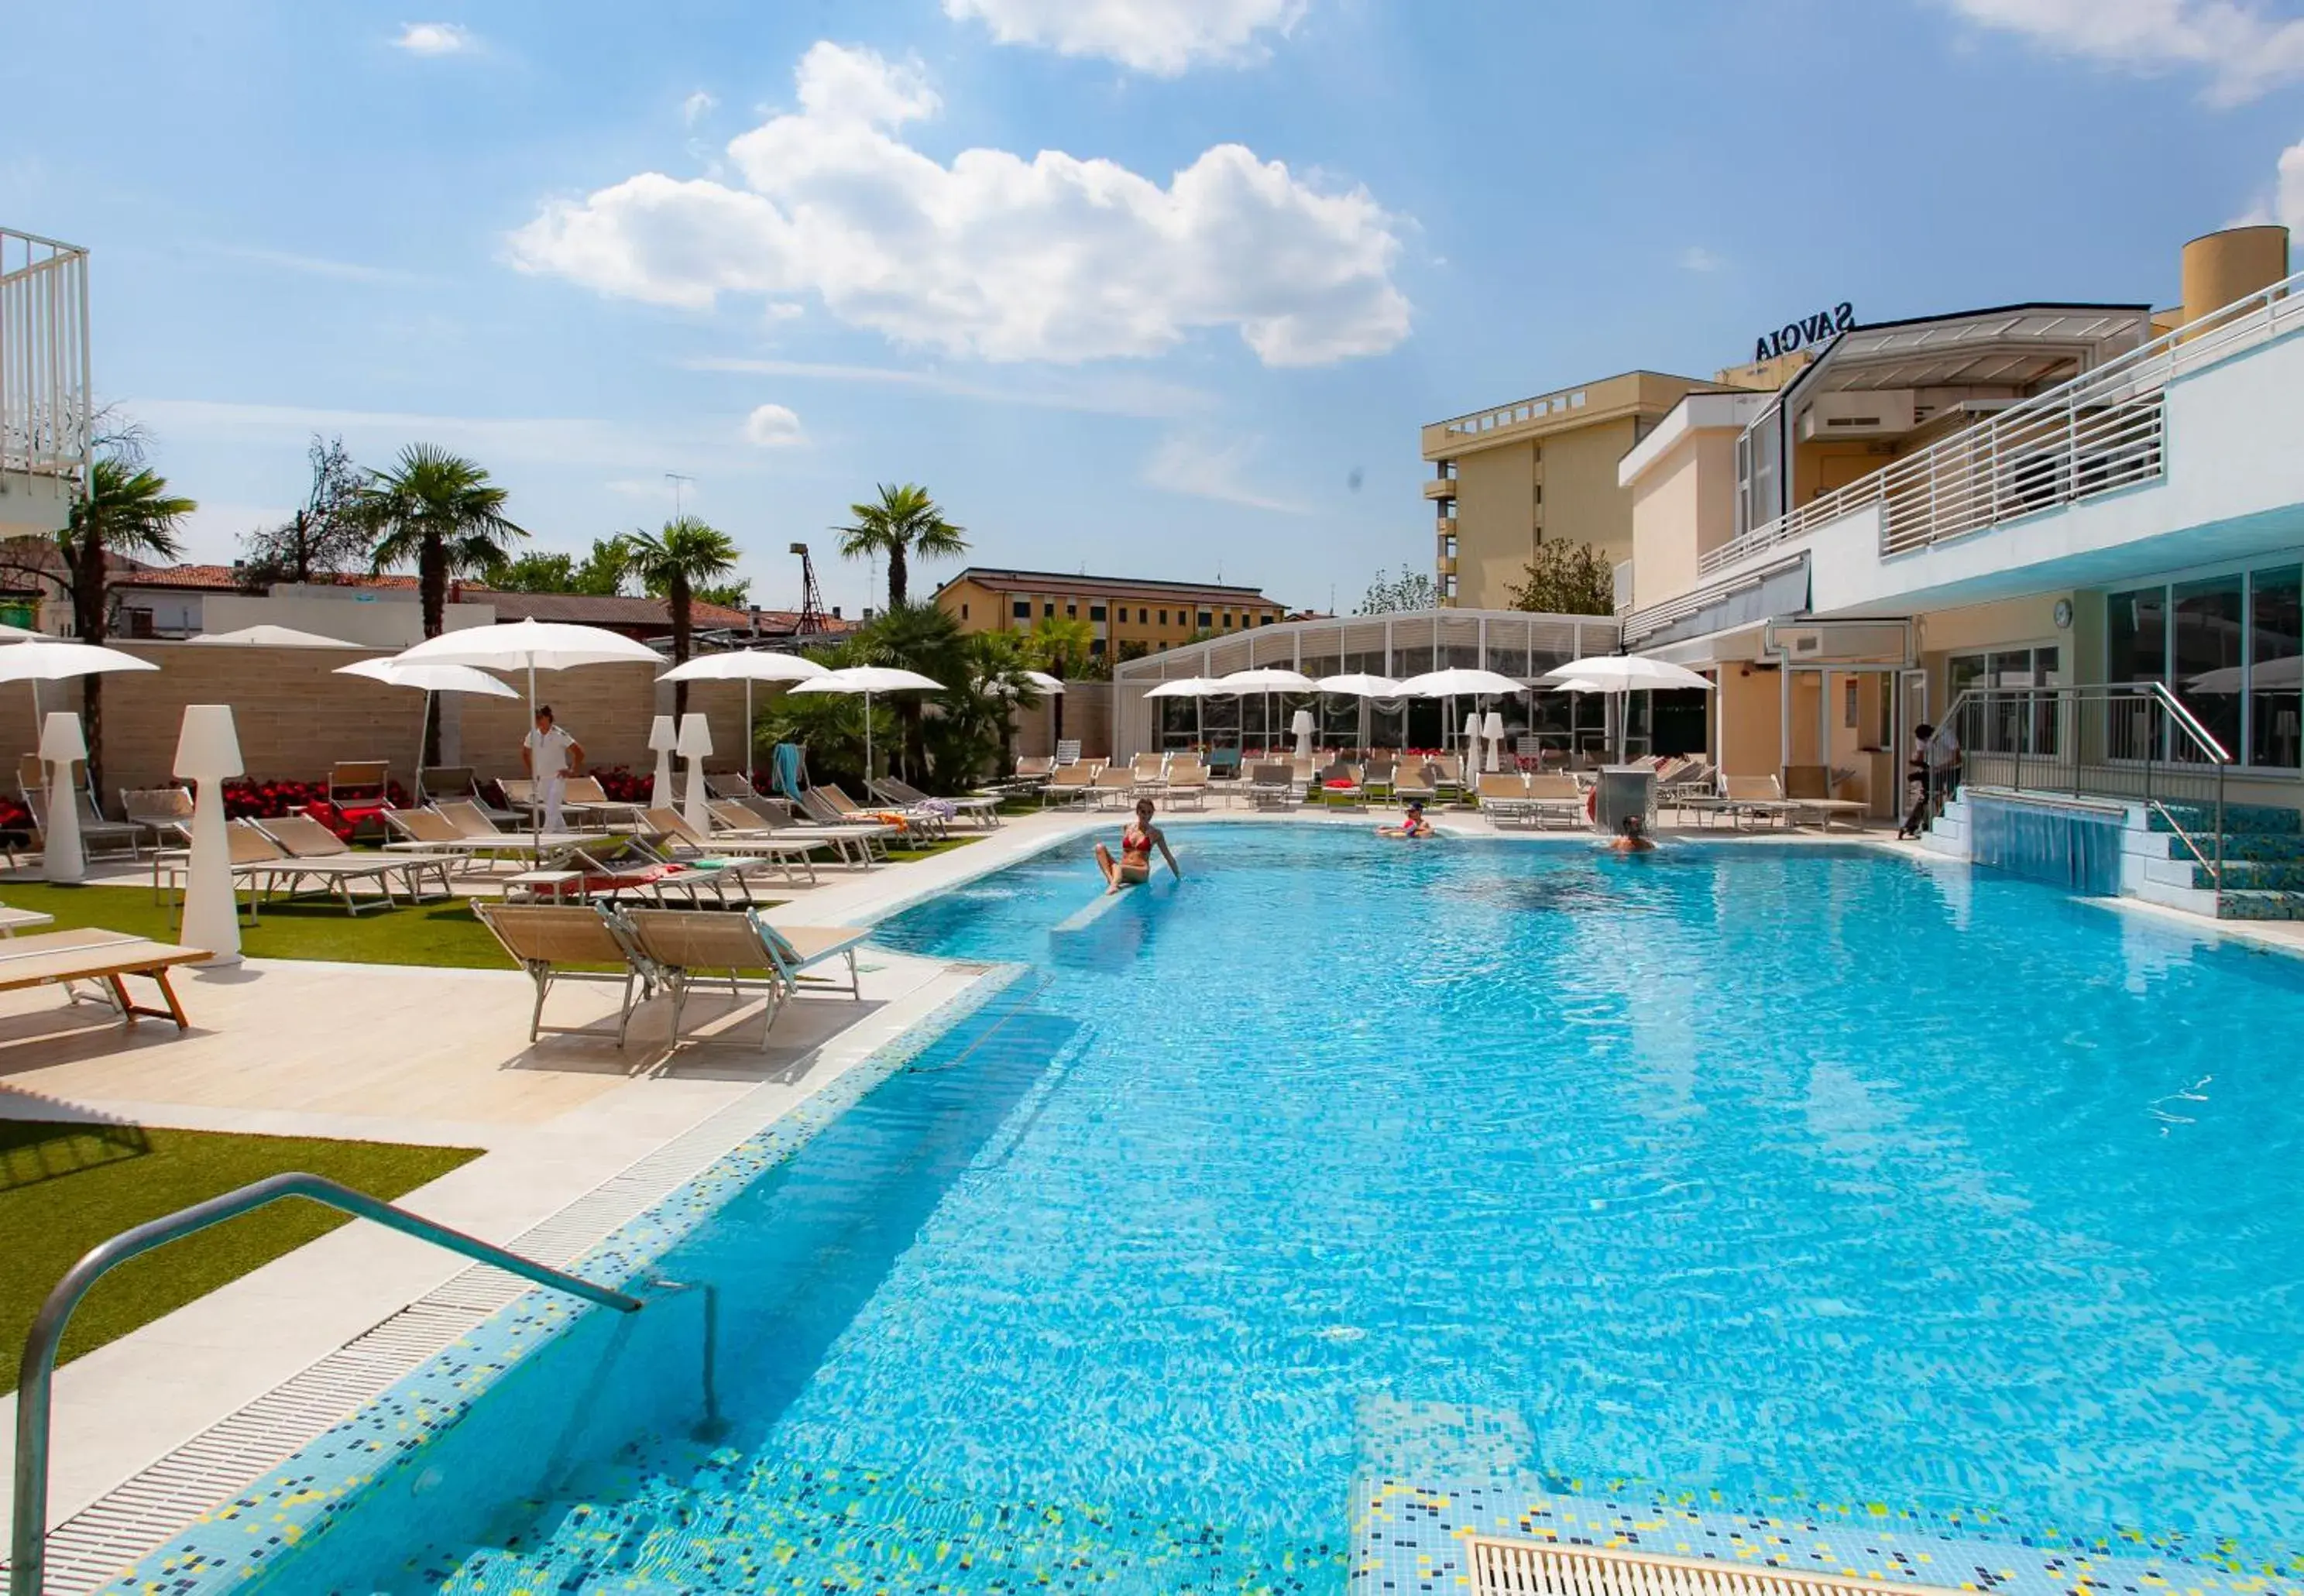 Swimming Pool in Palace Hotel Meggiorato